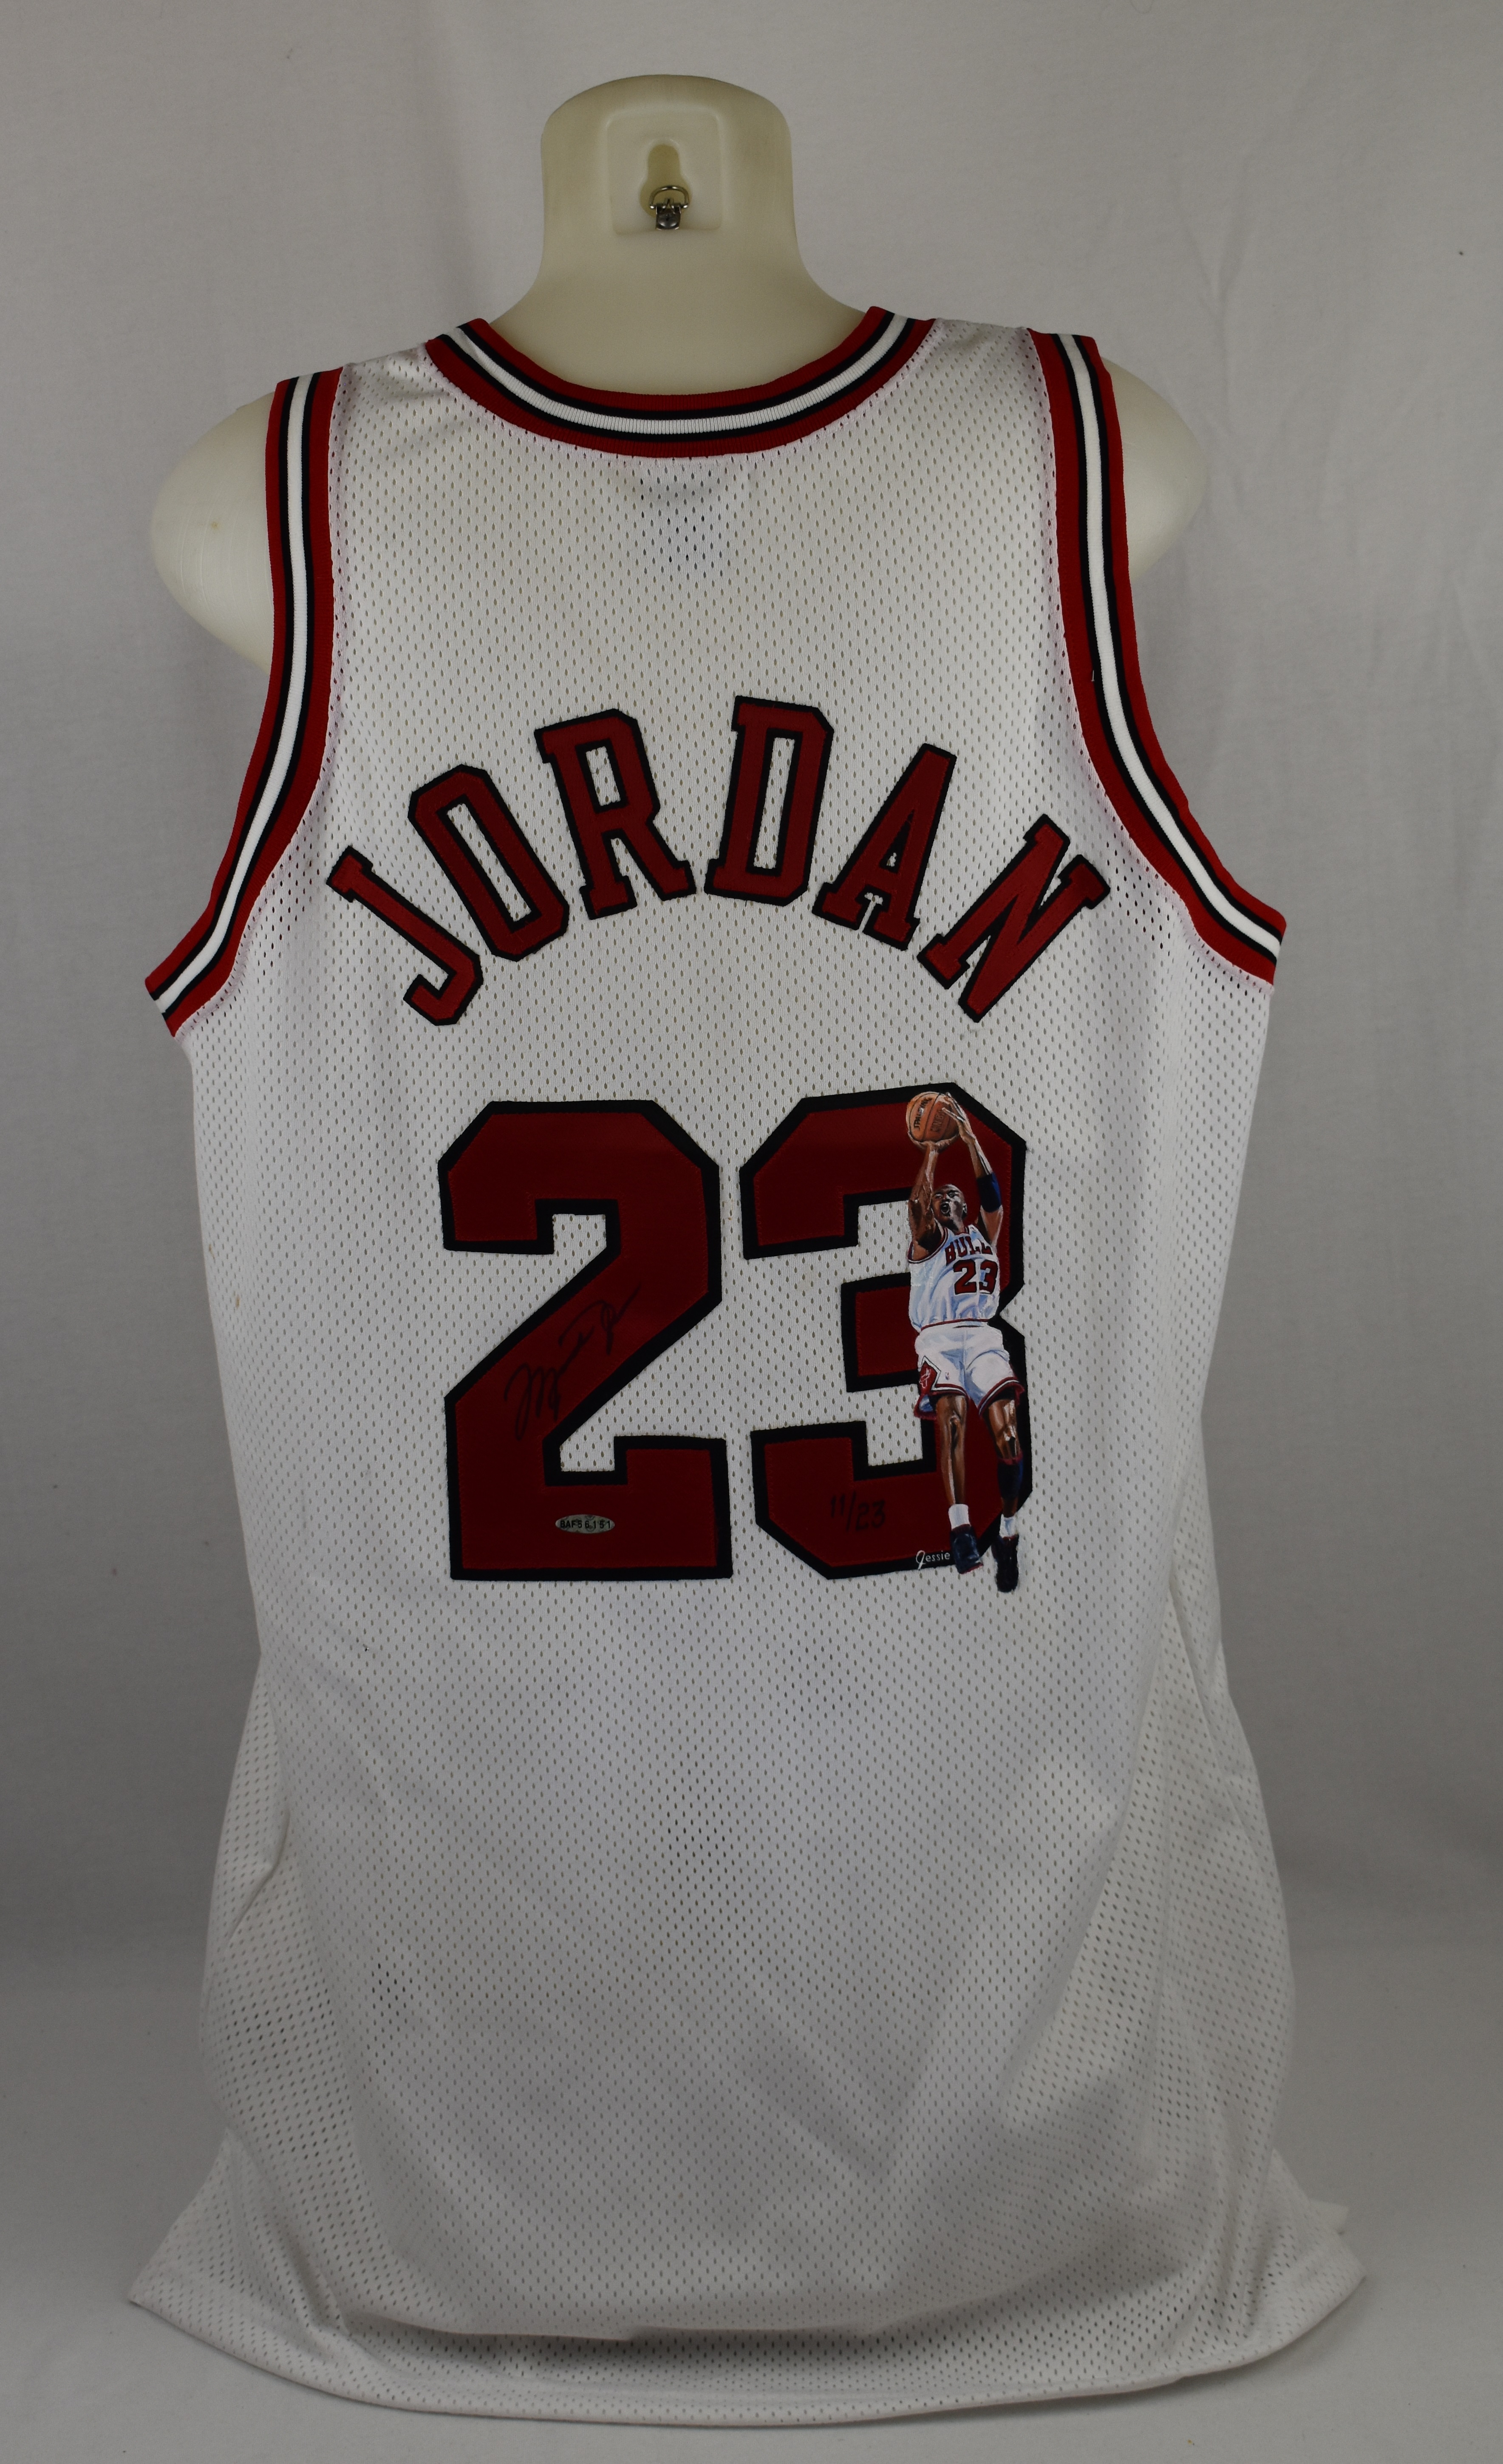 Michael Jordan Signed Autographed Limited Edition Jerseys Prints Basketball